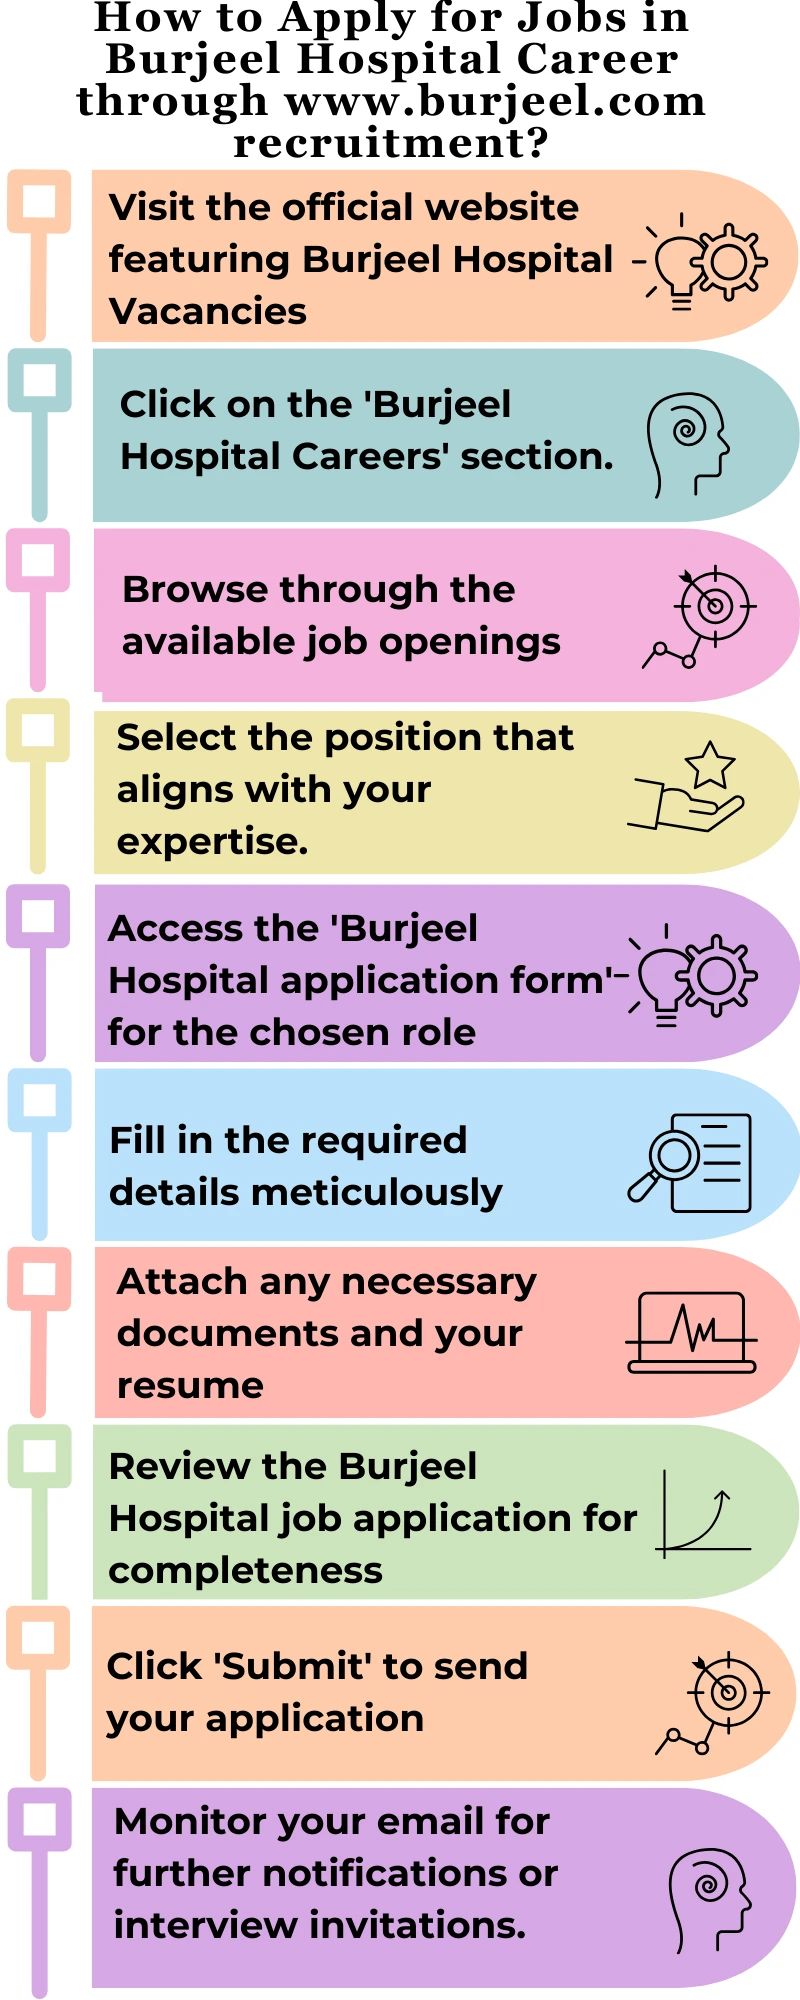 How to Apply for Jobs in Burjeel Hospital Career through www.burjeel.com recruitment